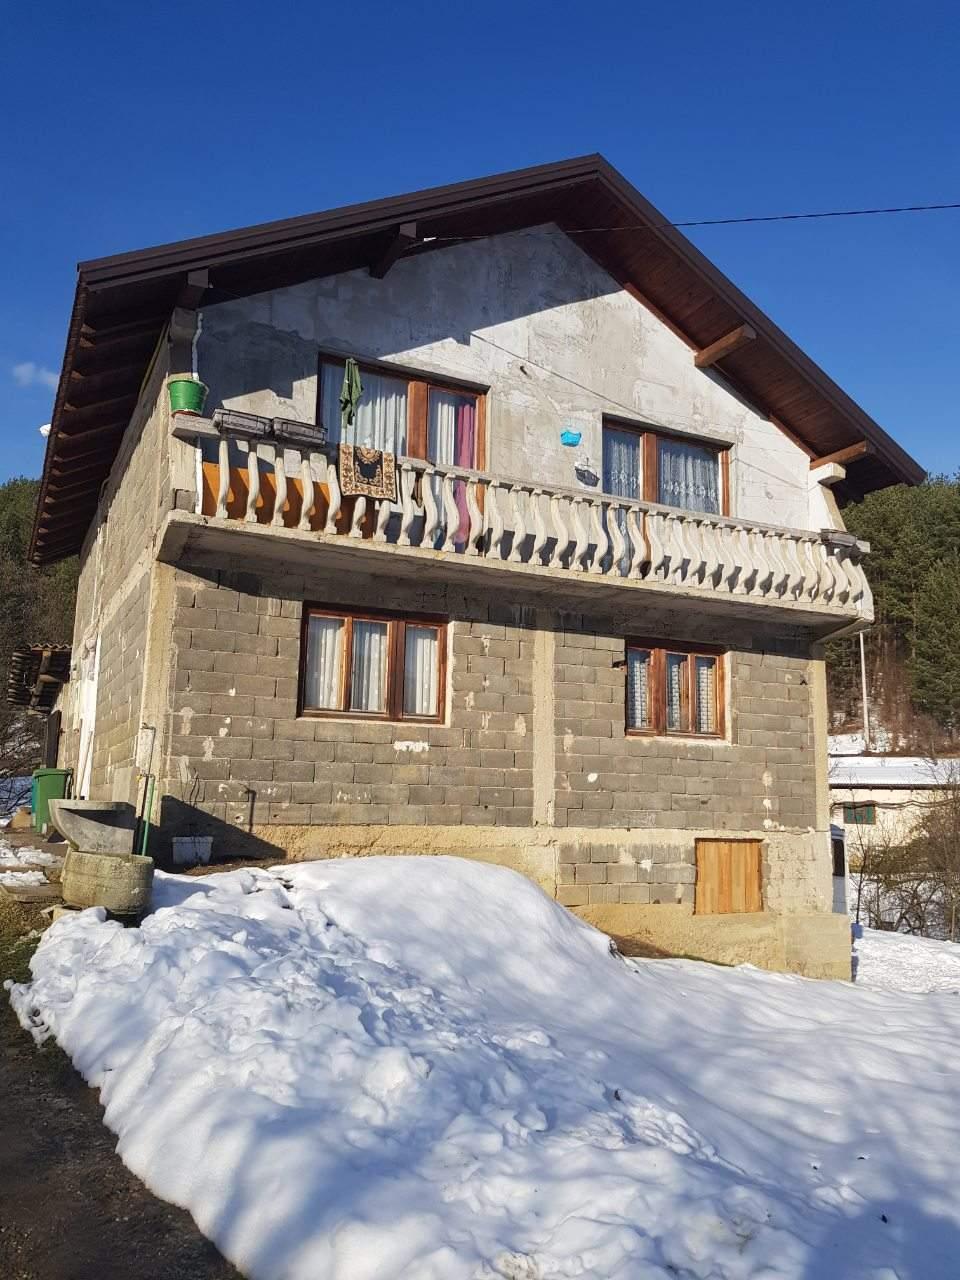 Kuća porodice Mašin u naselje Pločari Polje - Avaz